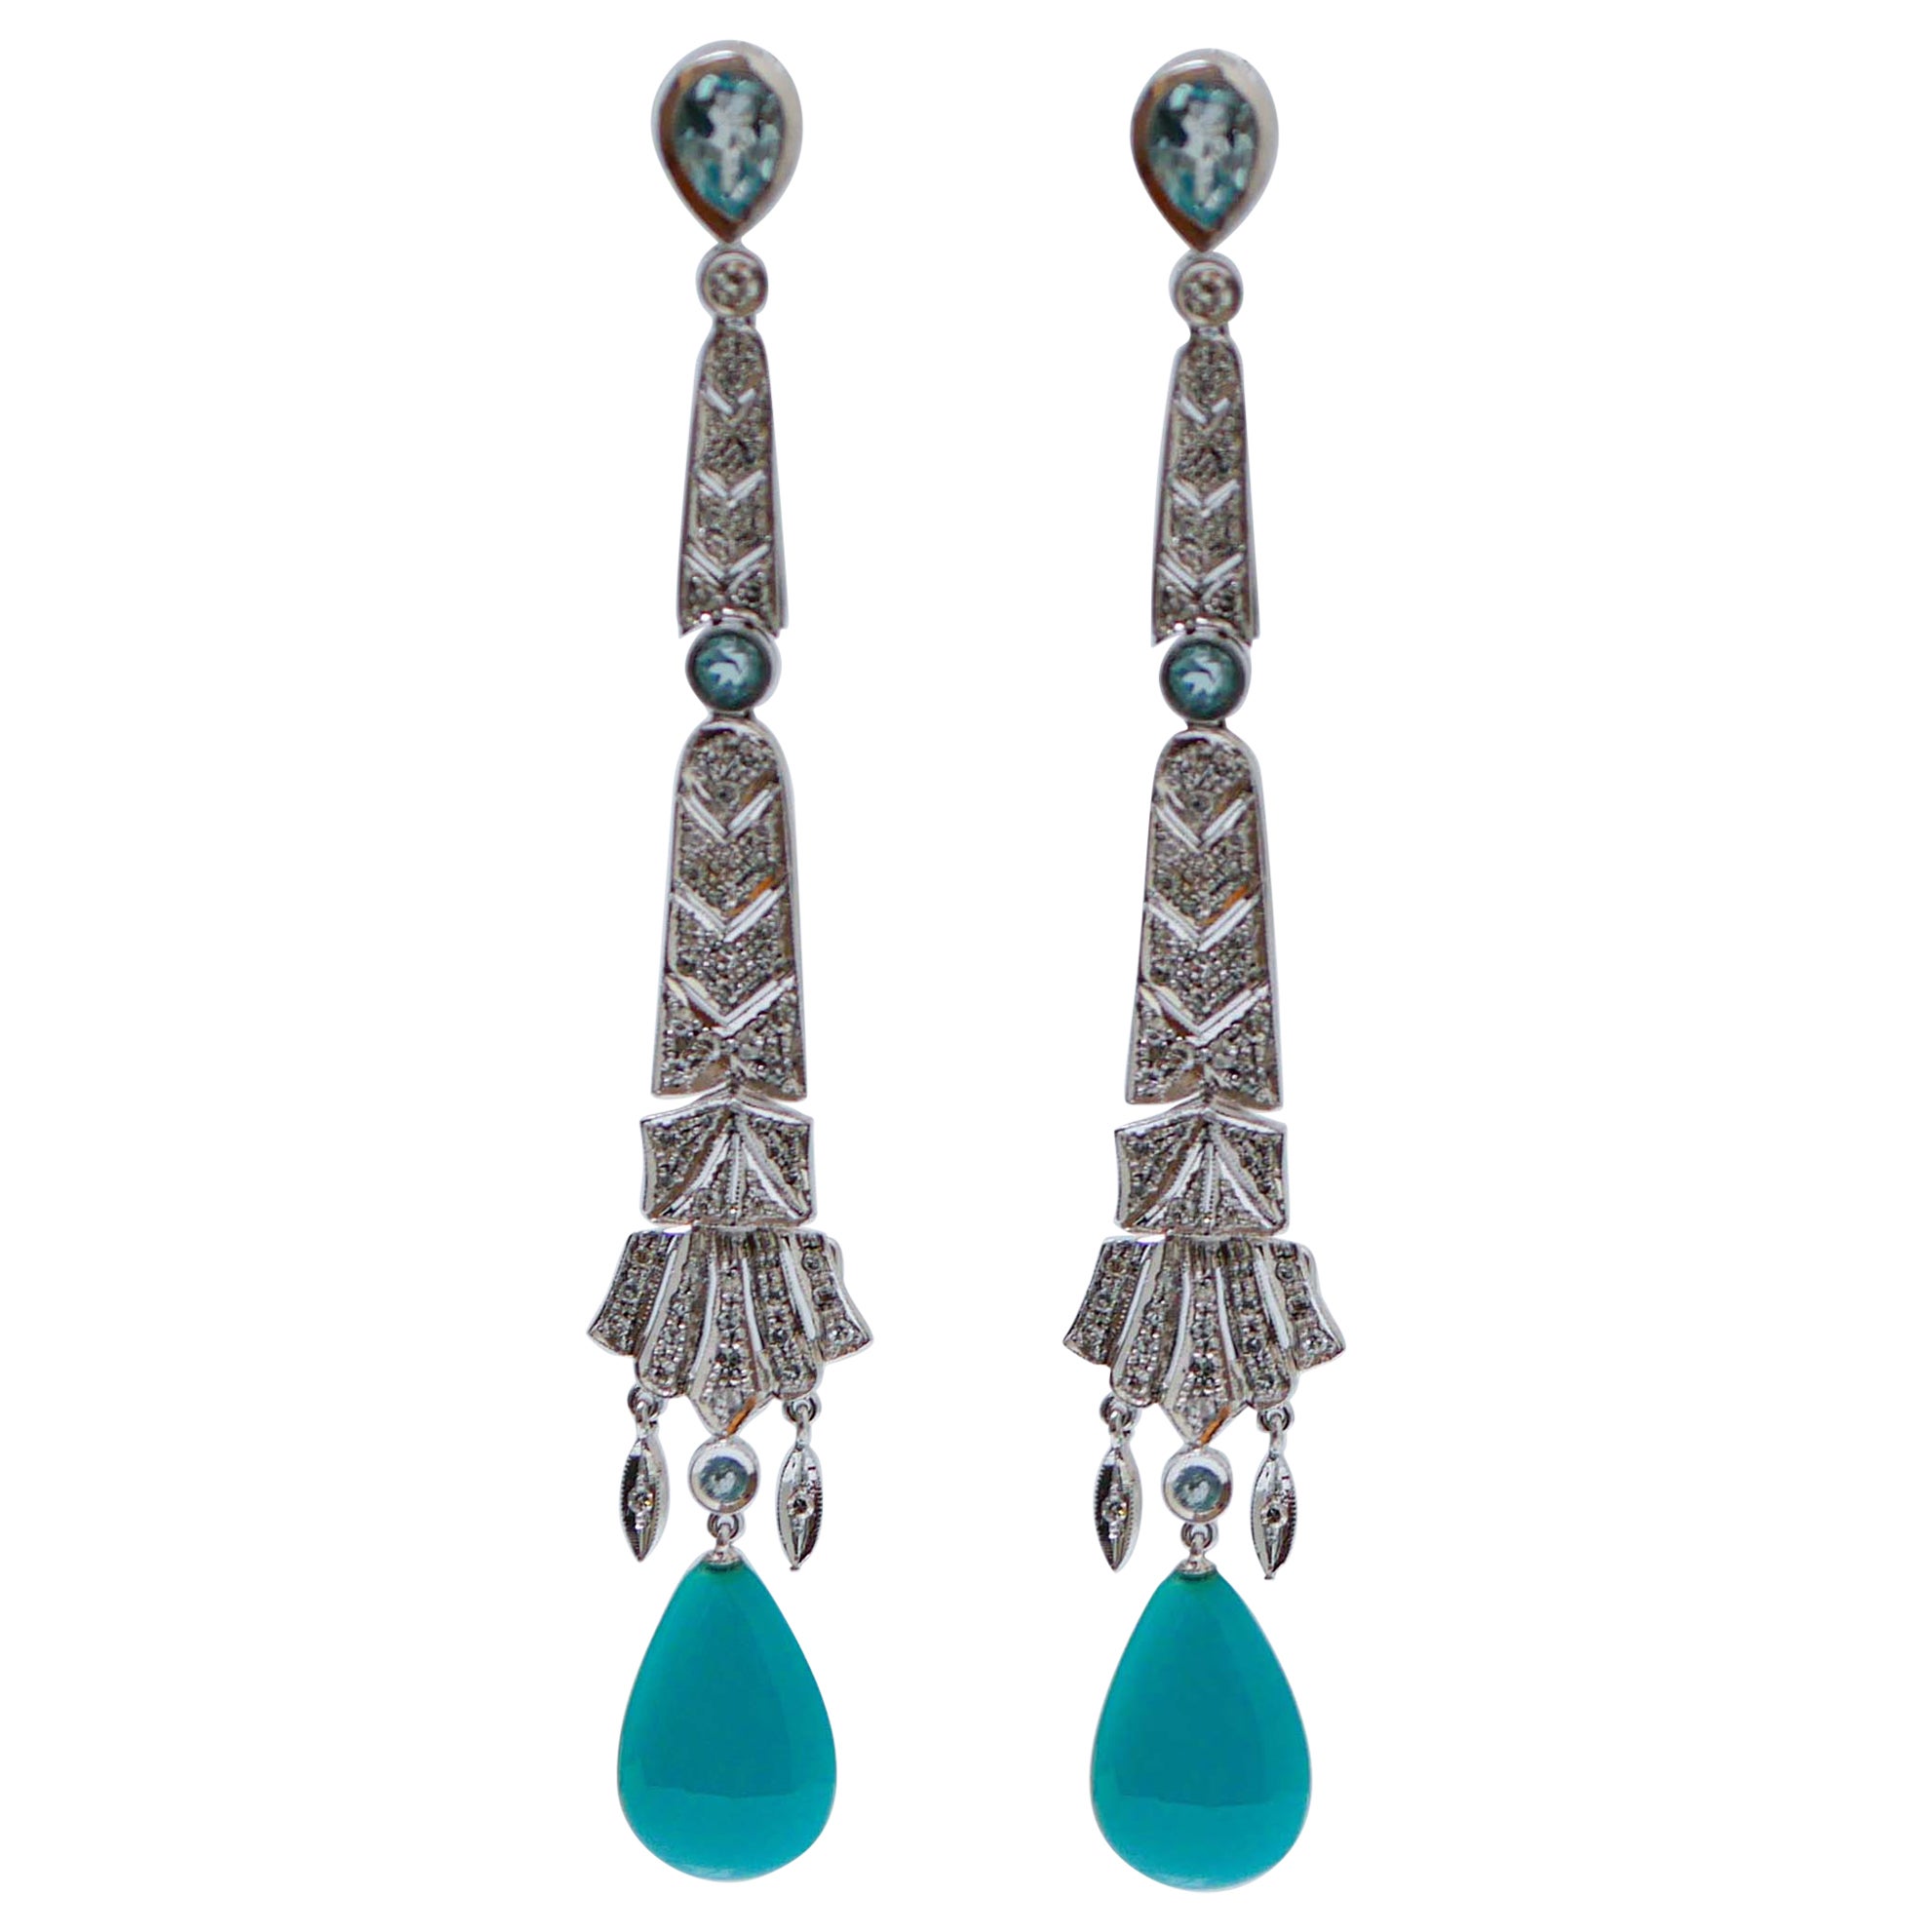 Platin-Ohrringe mit Aquamarinen in Farbe Topas, Türkis, Diamanten und Platin.